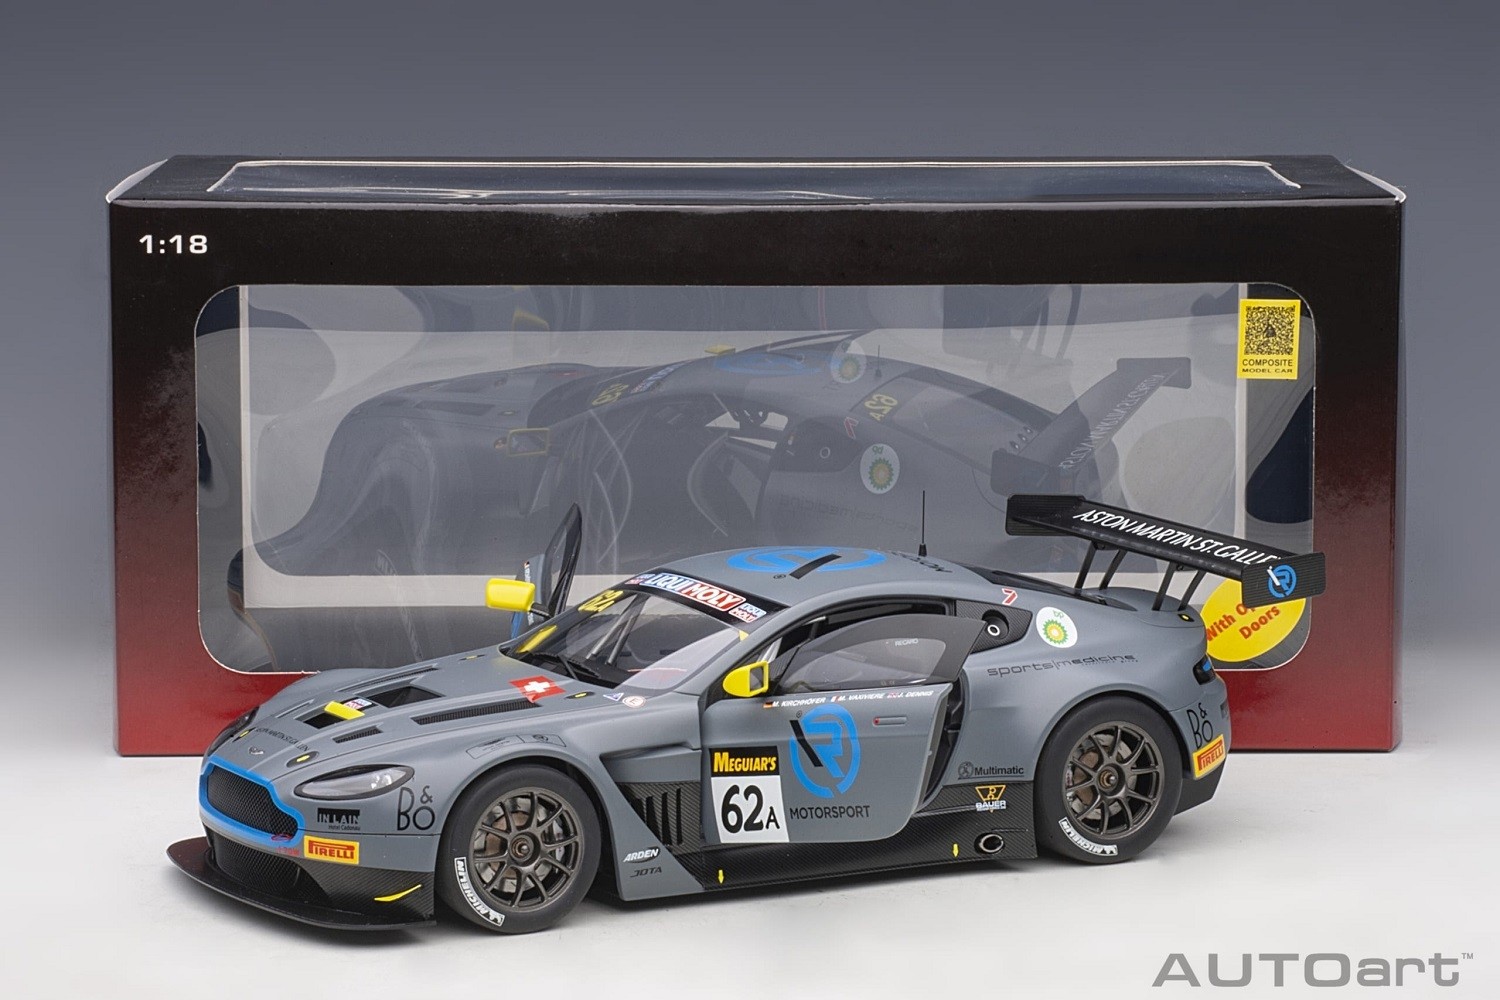 1/18 AUTOart Aston Martin V12 Vantage Bathurst 12hour Endurance Race 2015 for sale online 